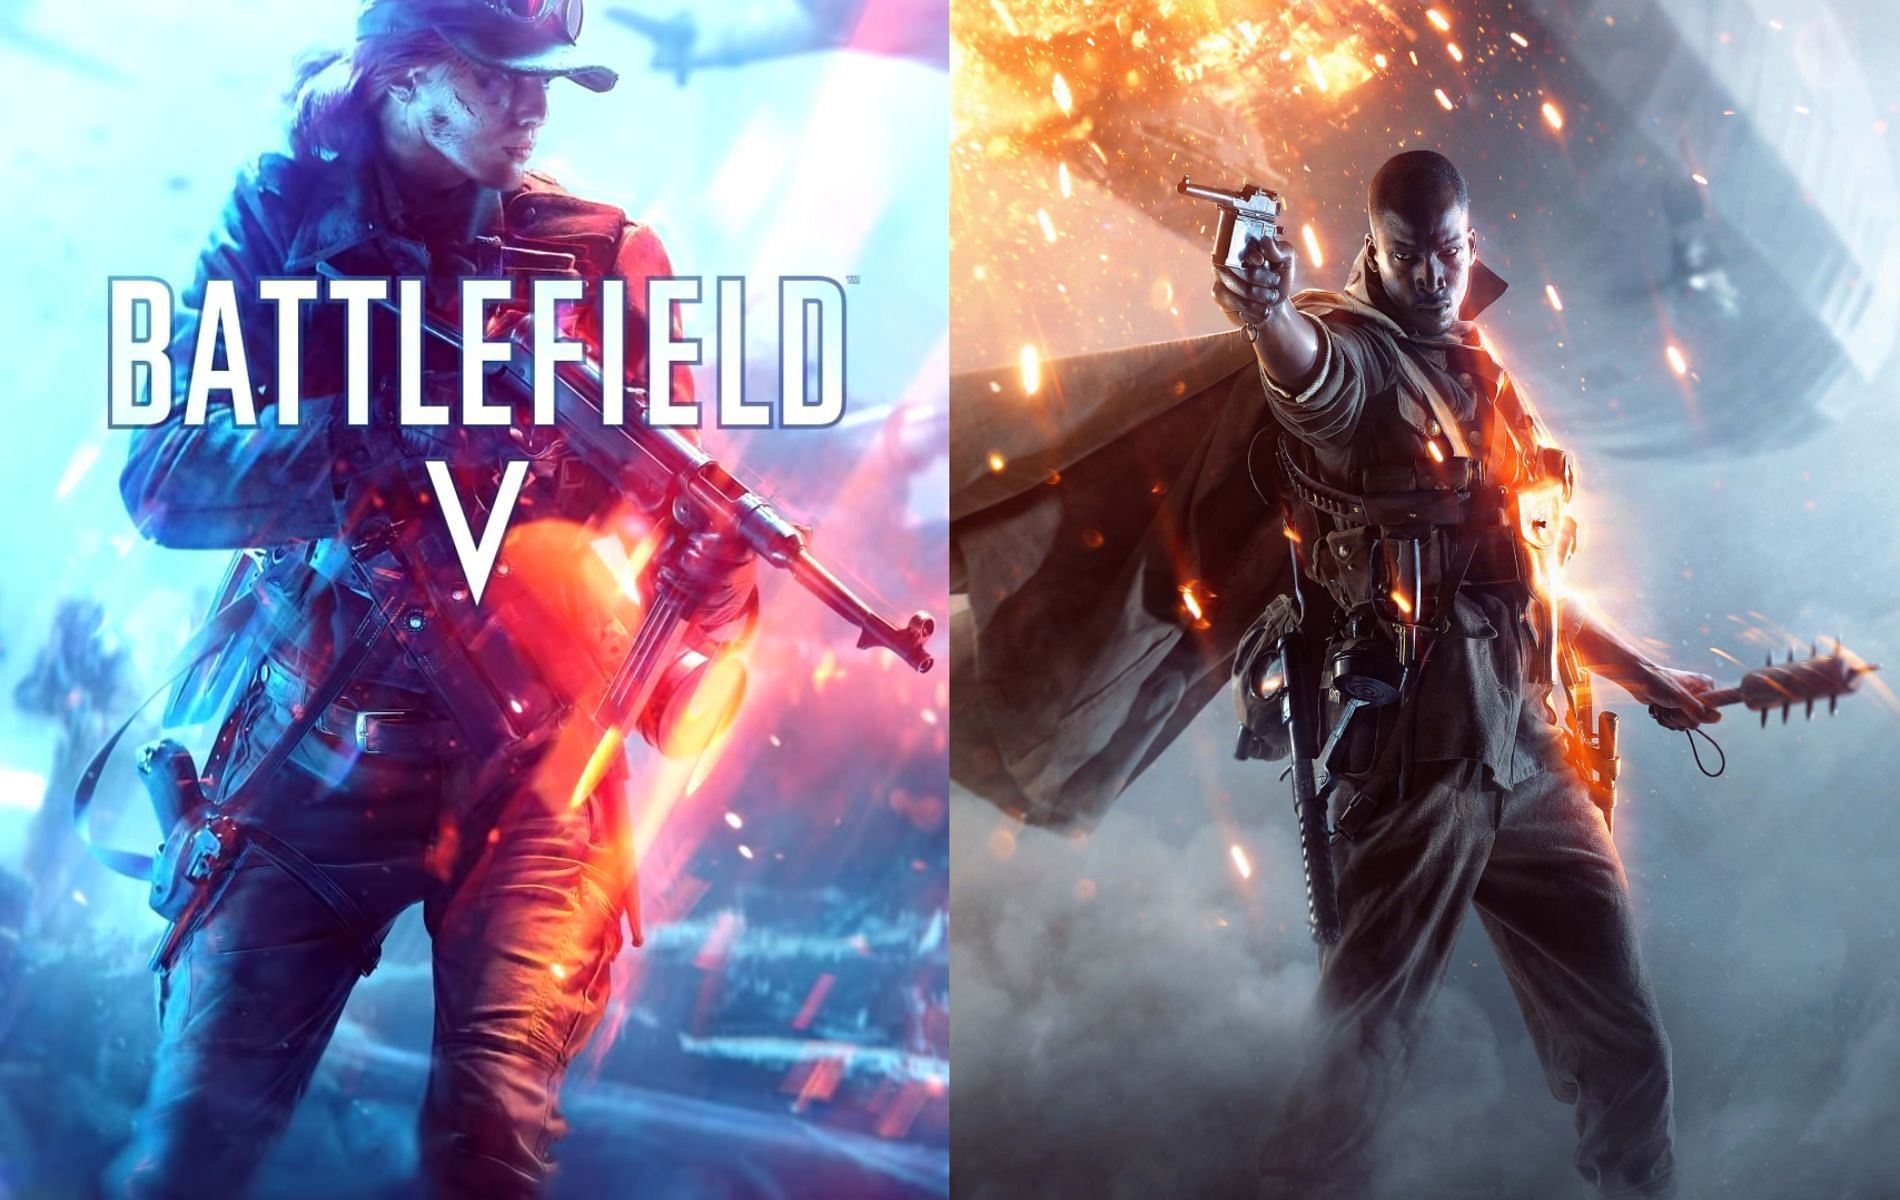 Comparison between Battlefield ! and Battlefield V (Images via DICE)